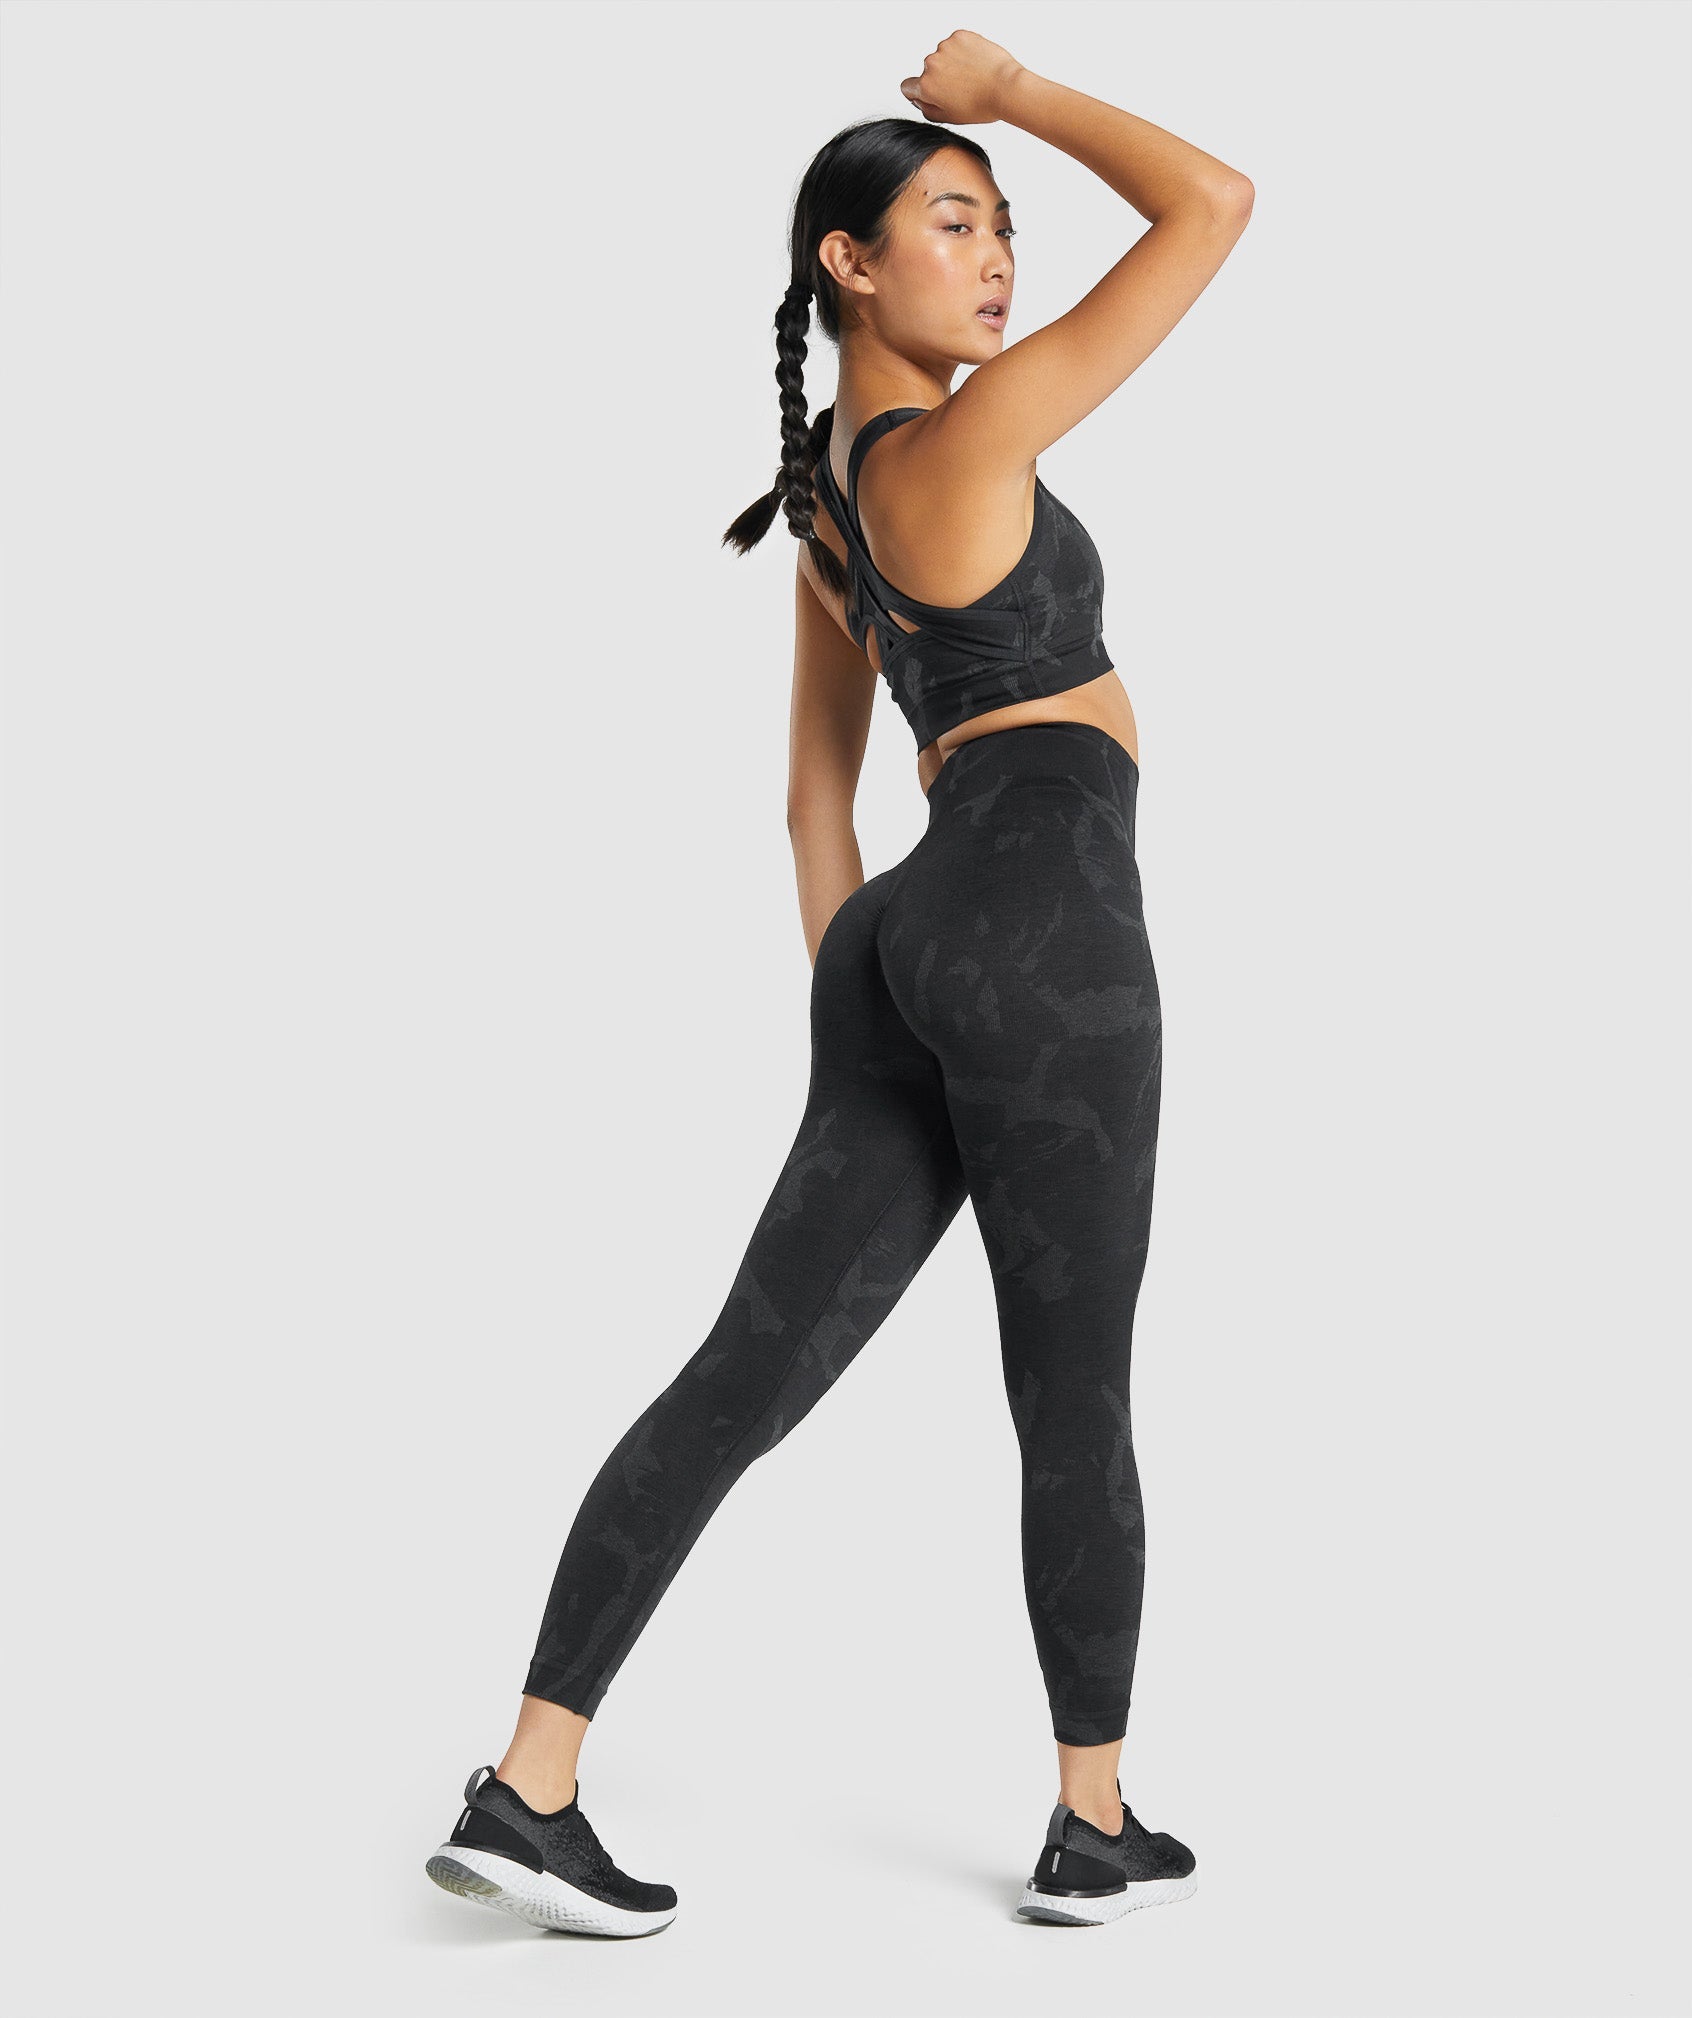 Womens Workout Dark Grey Camo Leggings with Pockets | Gearbunch.com